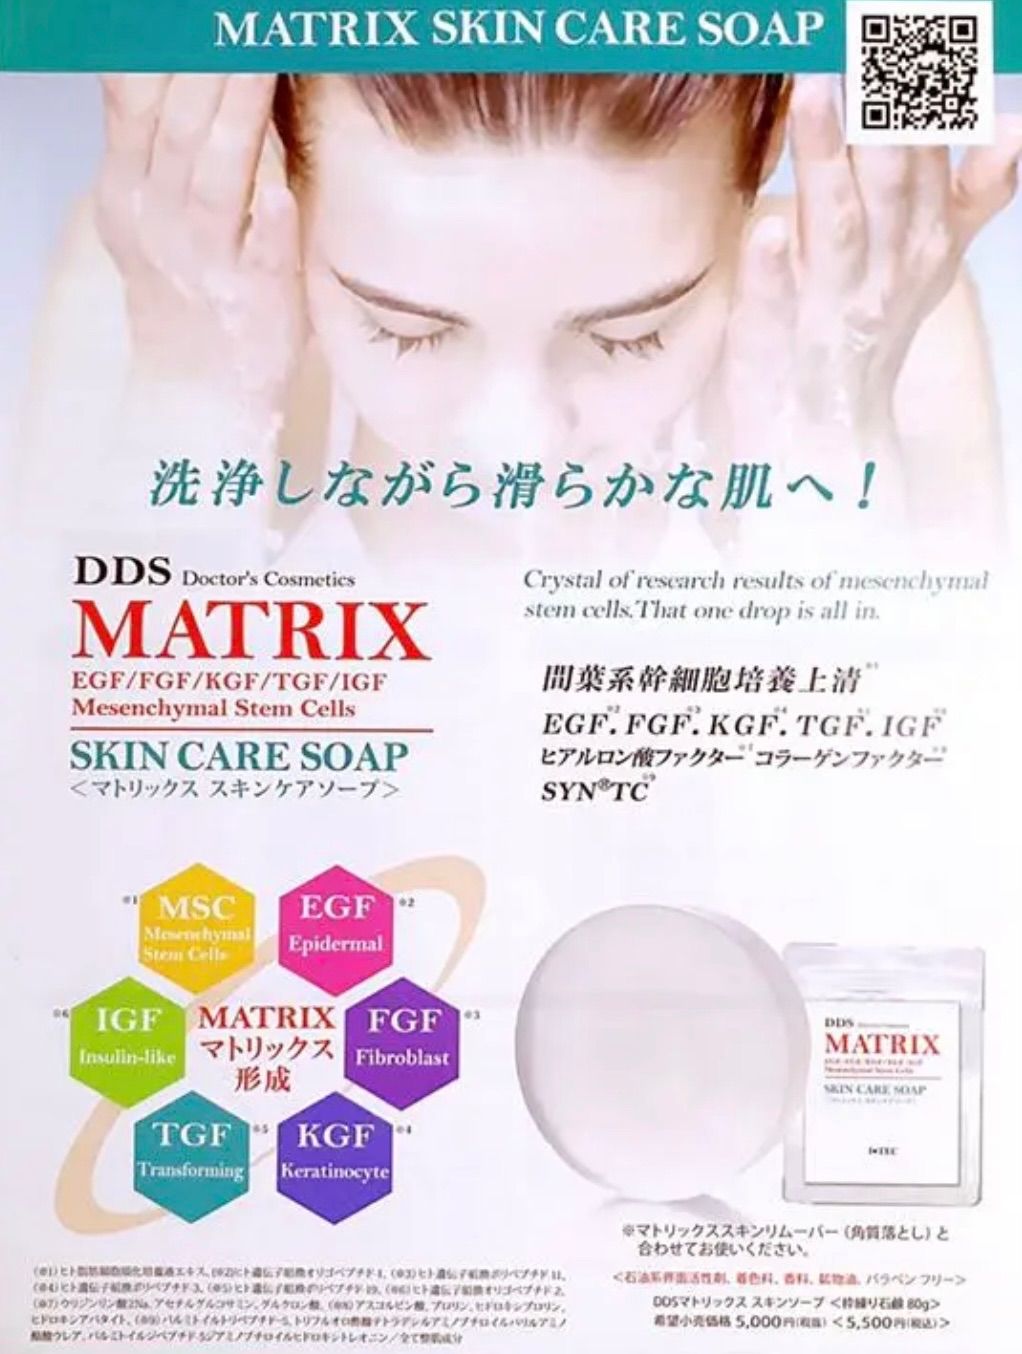 DDS MATRIX SKINCARE SOAP - 洗顔料